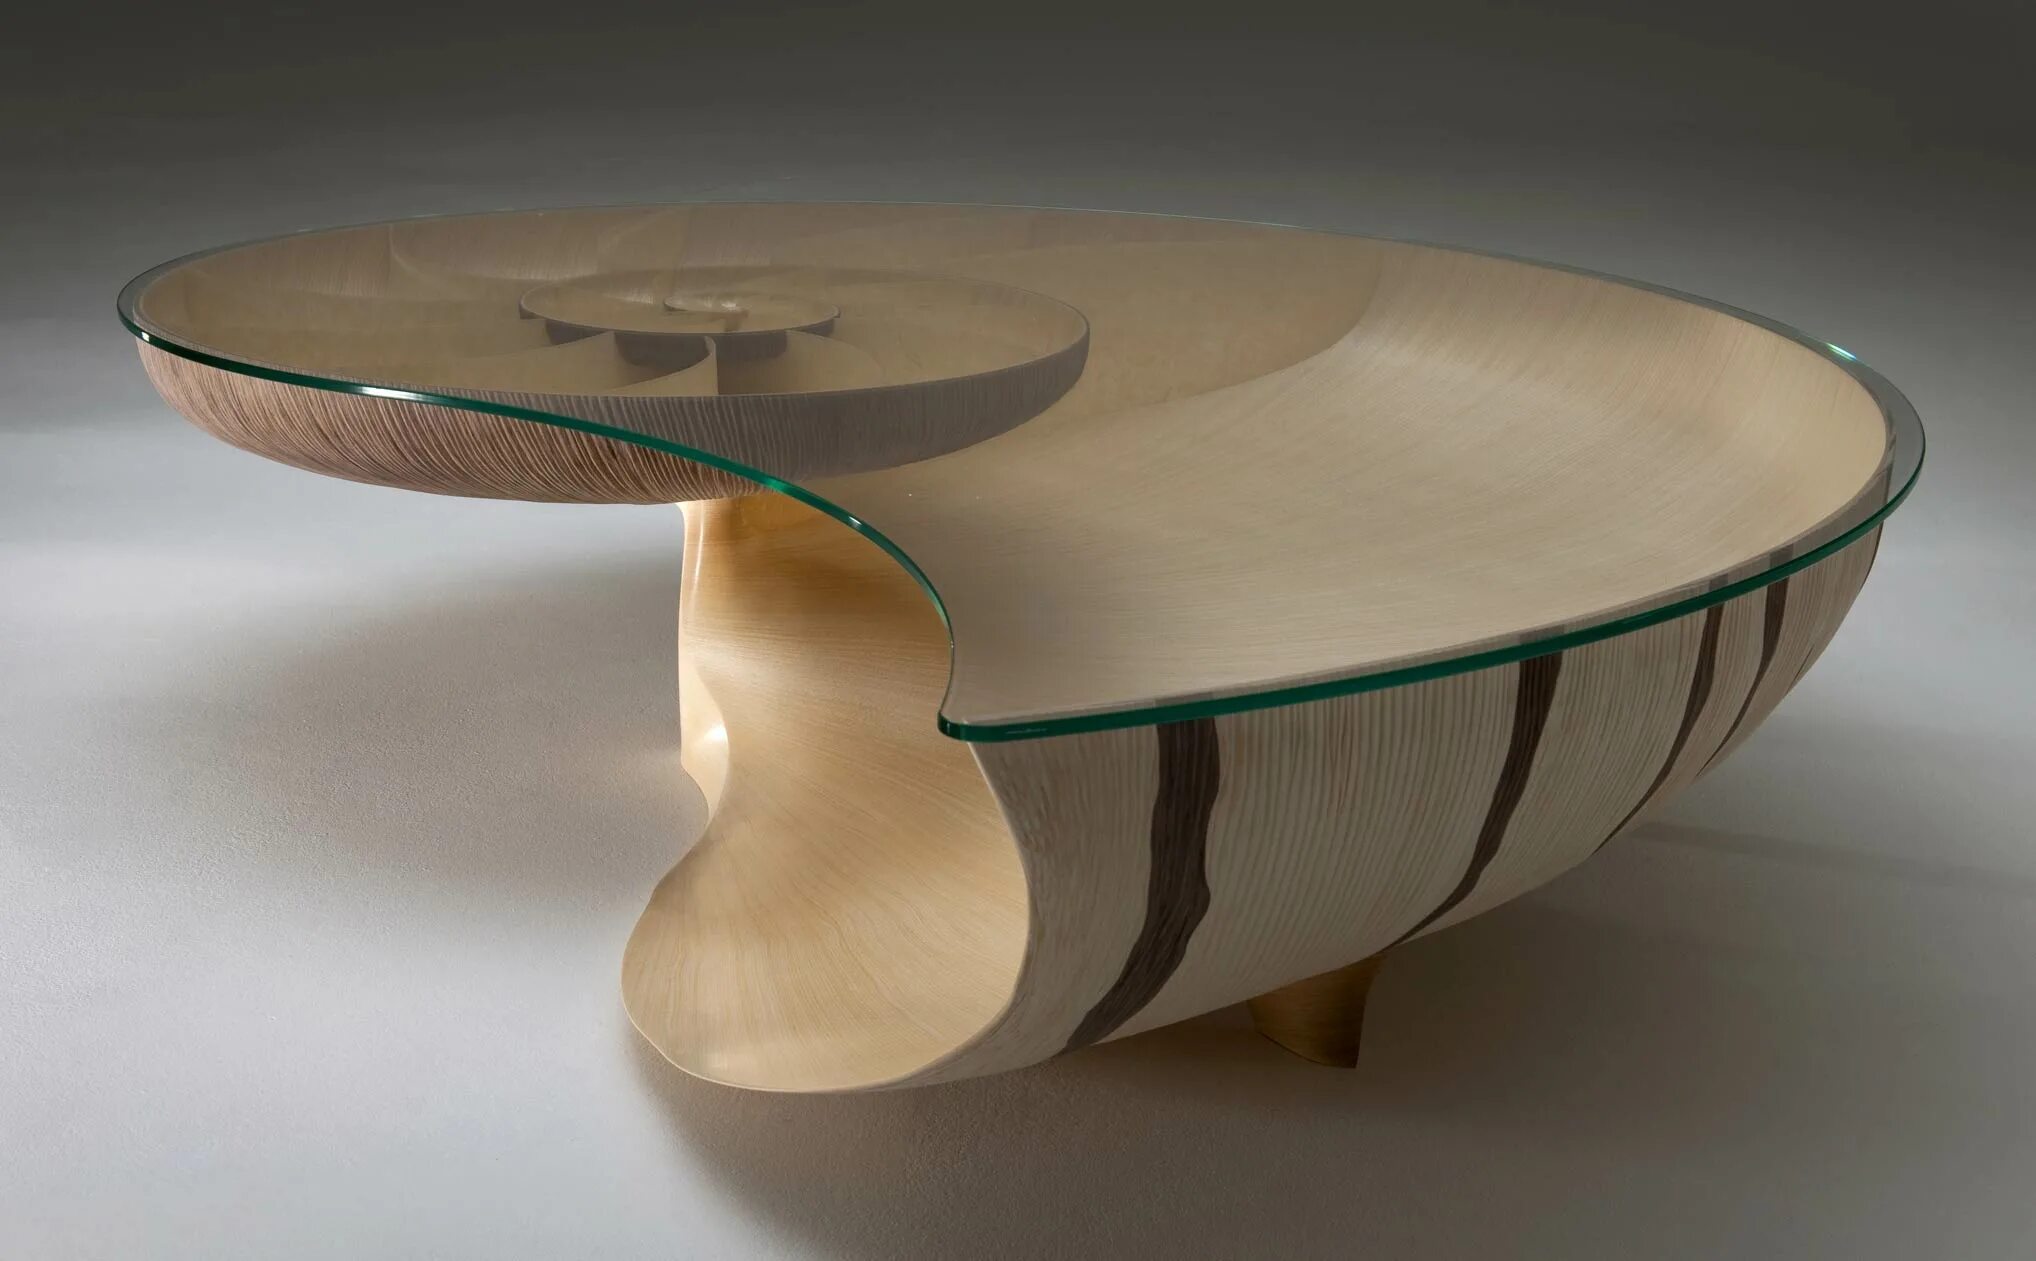 Нестандартные предметы. Круглый стол AMCLASSIC aim Dining Table. Необычные столы. Дизайнерские столы. Необычный стол дизайнерский.